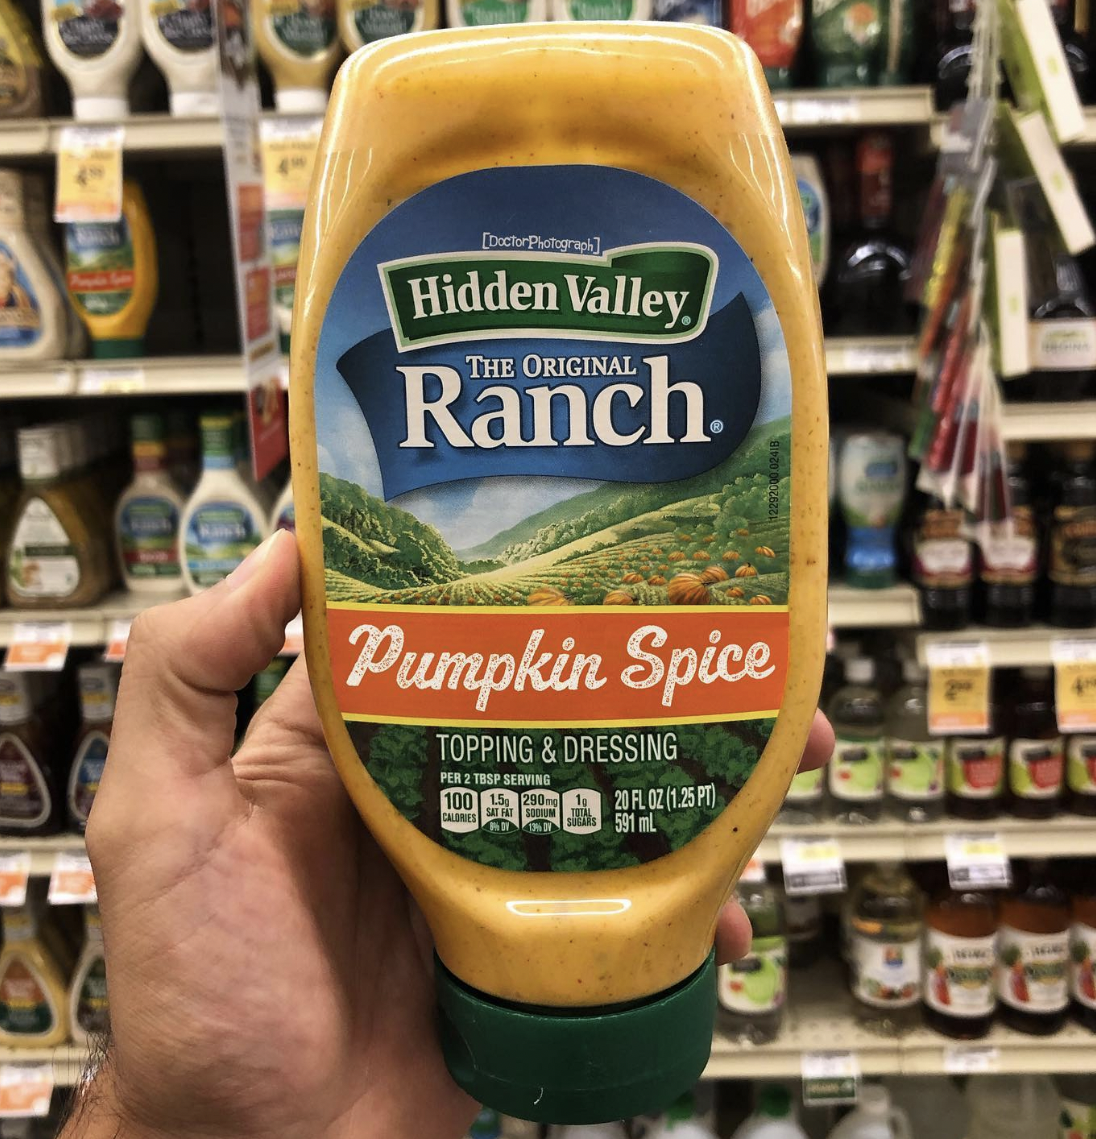 doctor photograph memes - pumpkin spice ranch dressing - Hidden Valley The Original Pumpkin Spice Topping & Dressing Per 2 Trap Serving 100 Chanti 20.01.25 P 581 Jogo